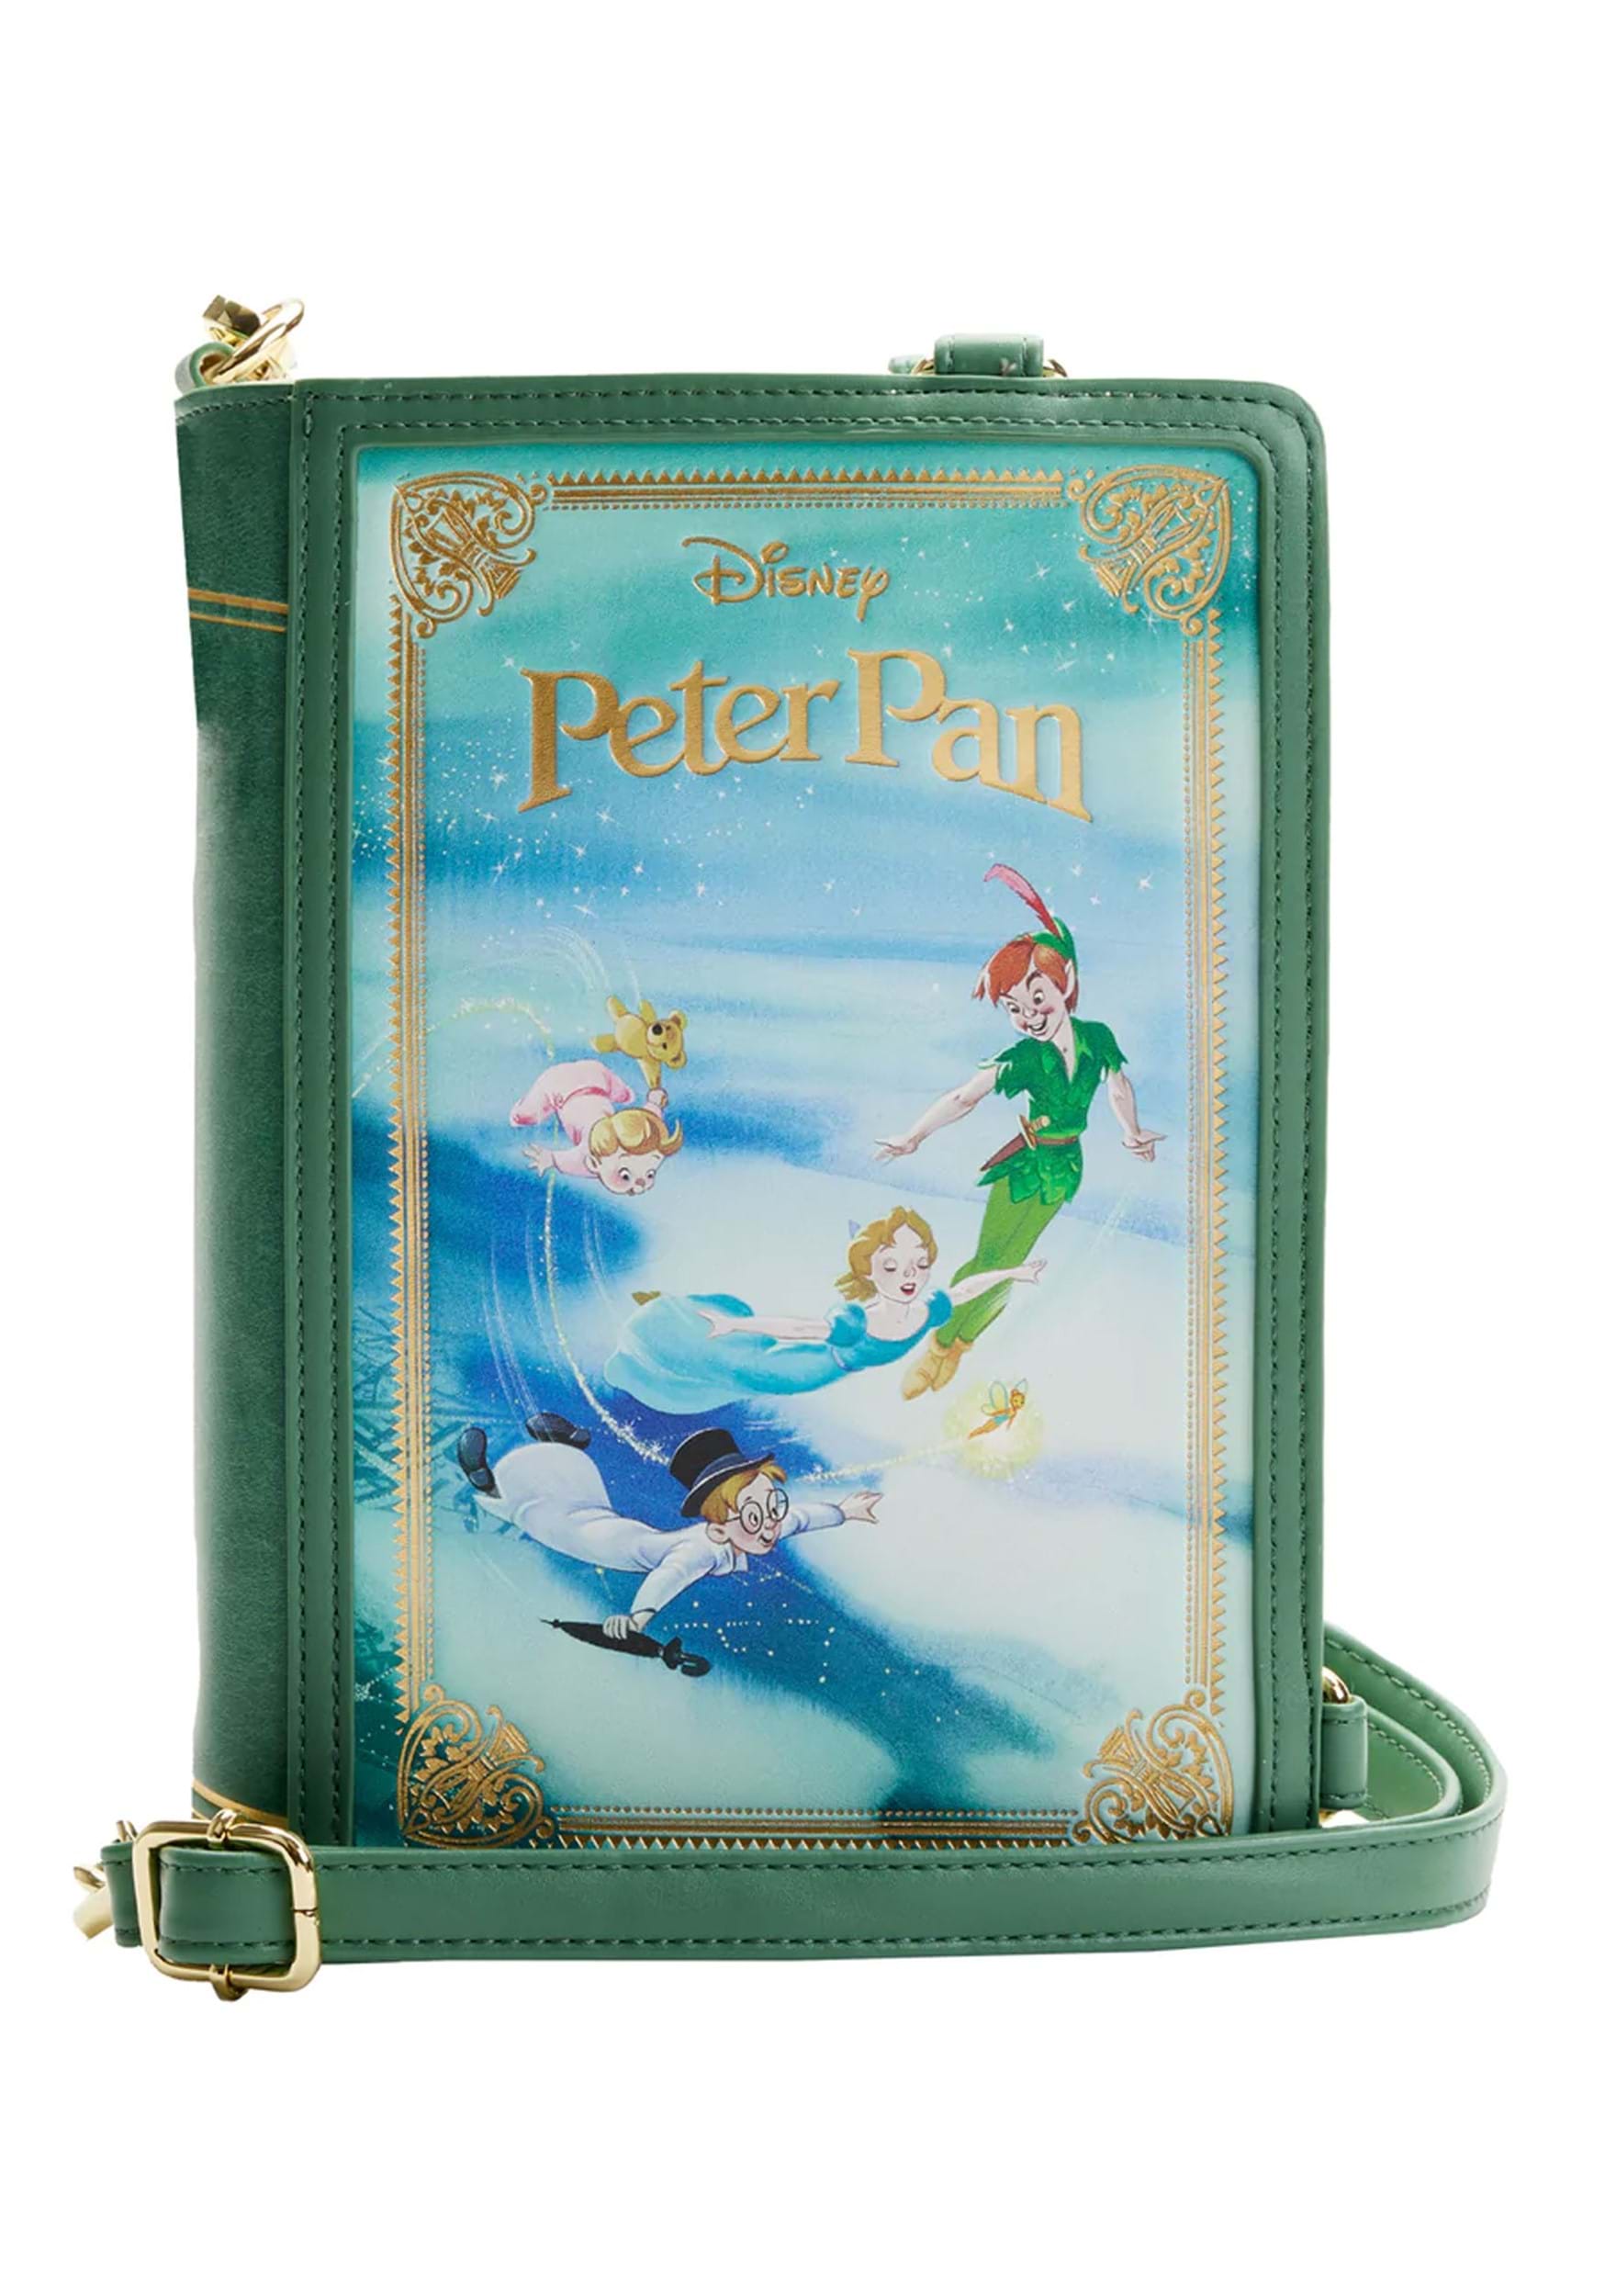 Disney Peter Pan Book Convertible Crossbody Bag by Loungefly